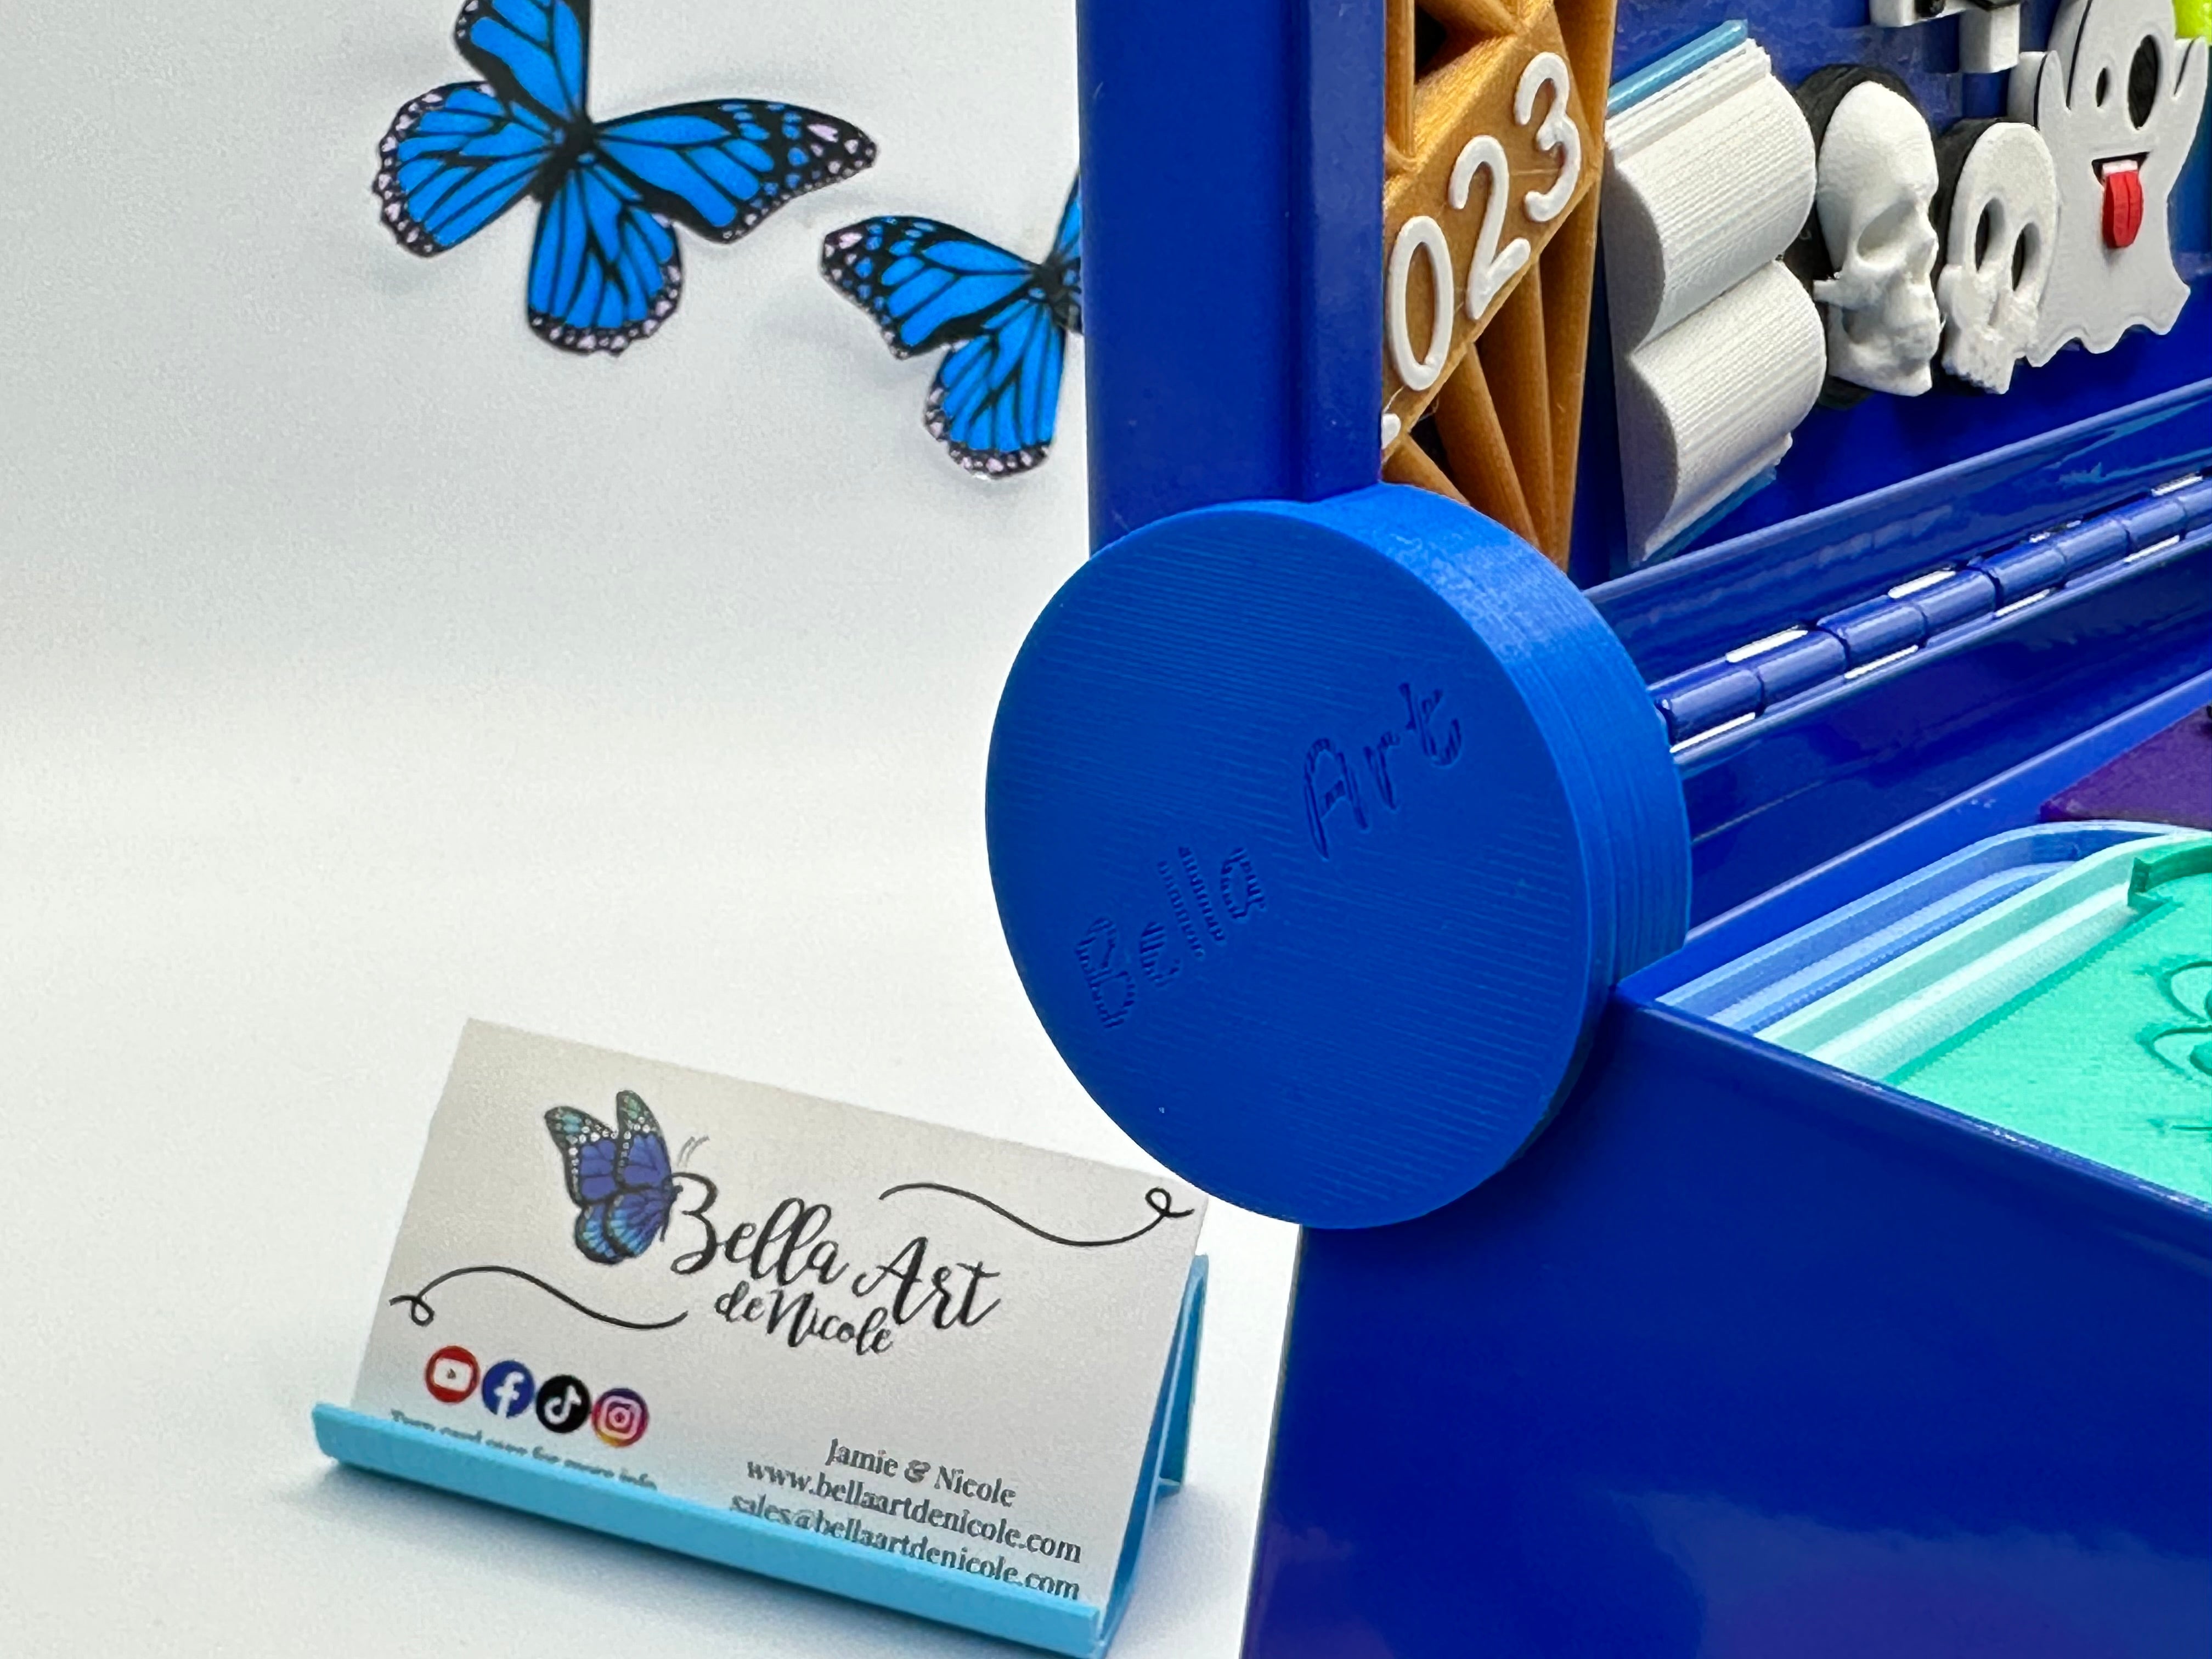 Lowe's Home Improvement on Instagram: The Kobalt Mini Toolbox is